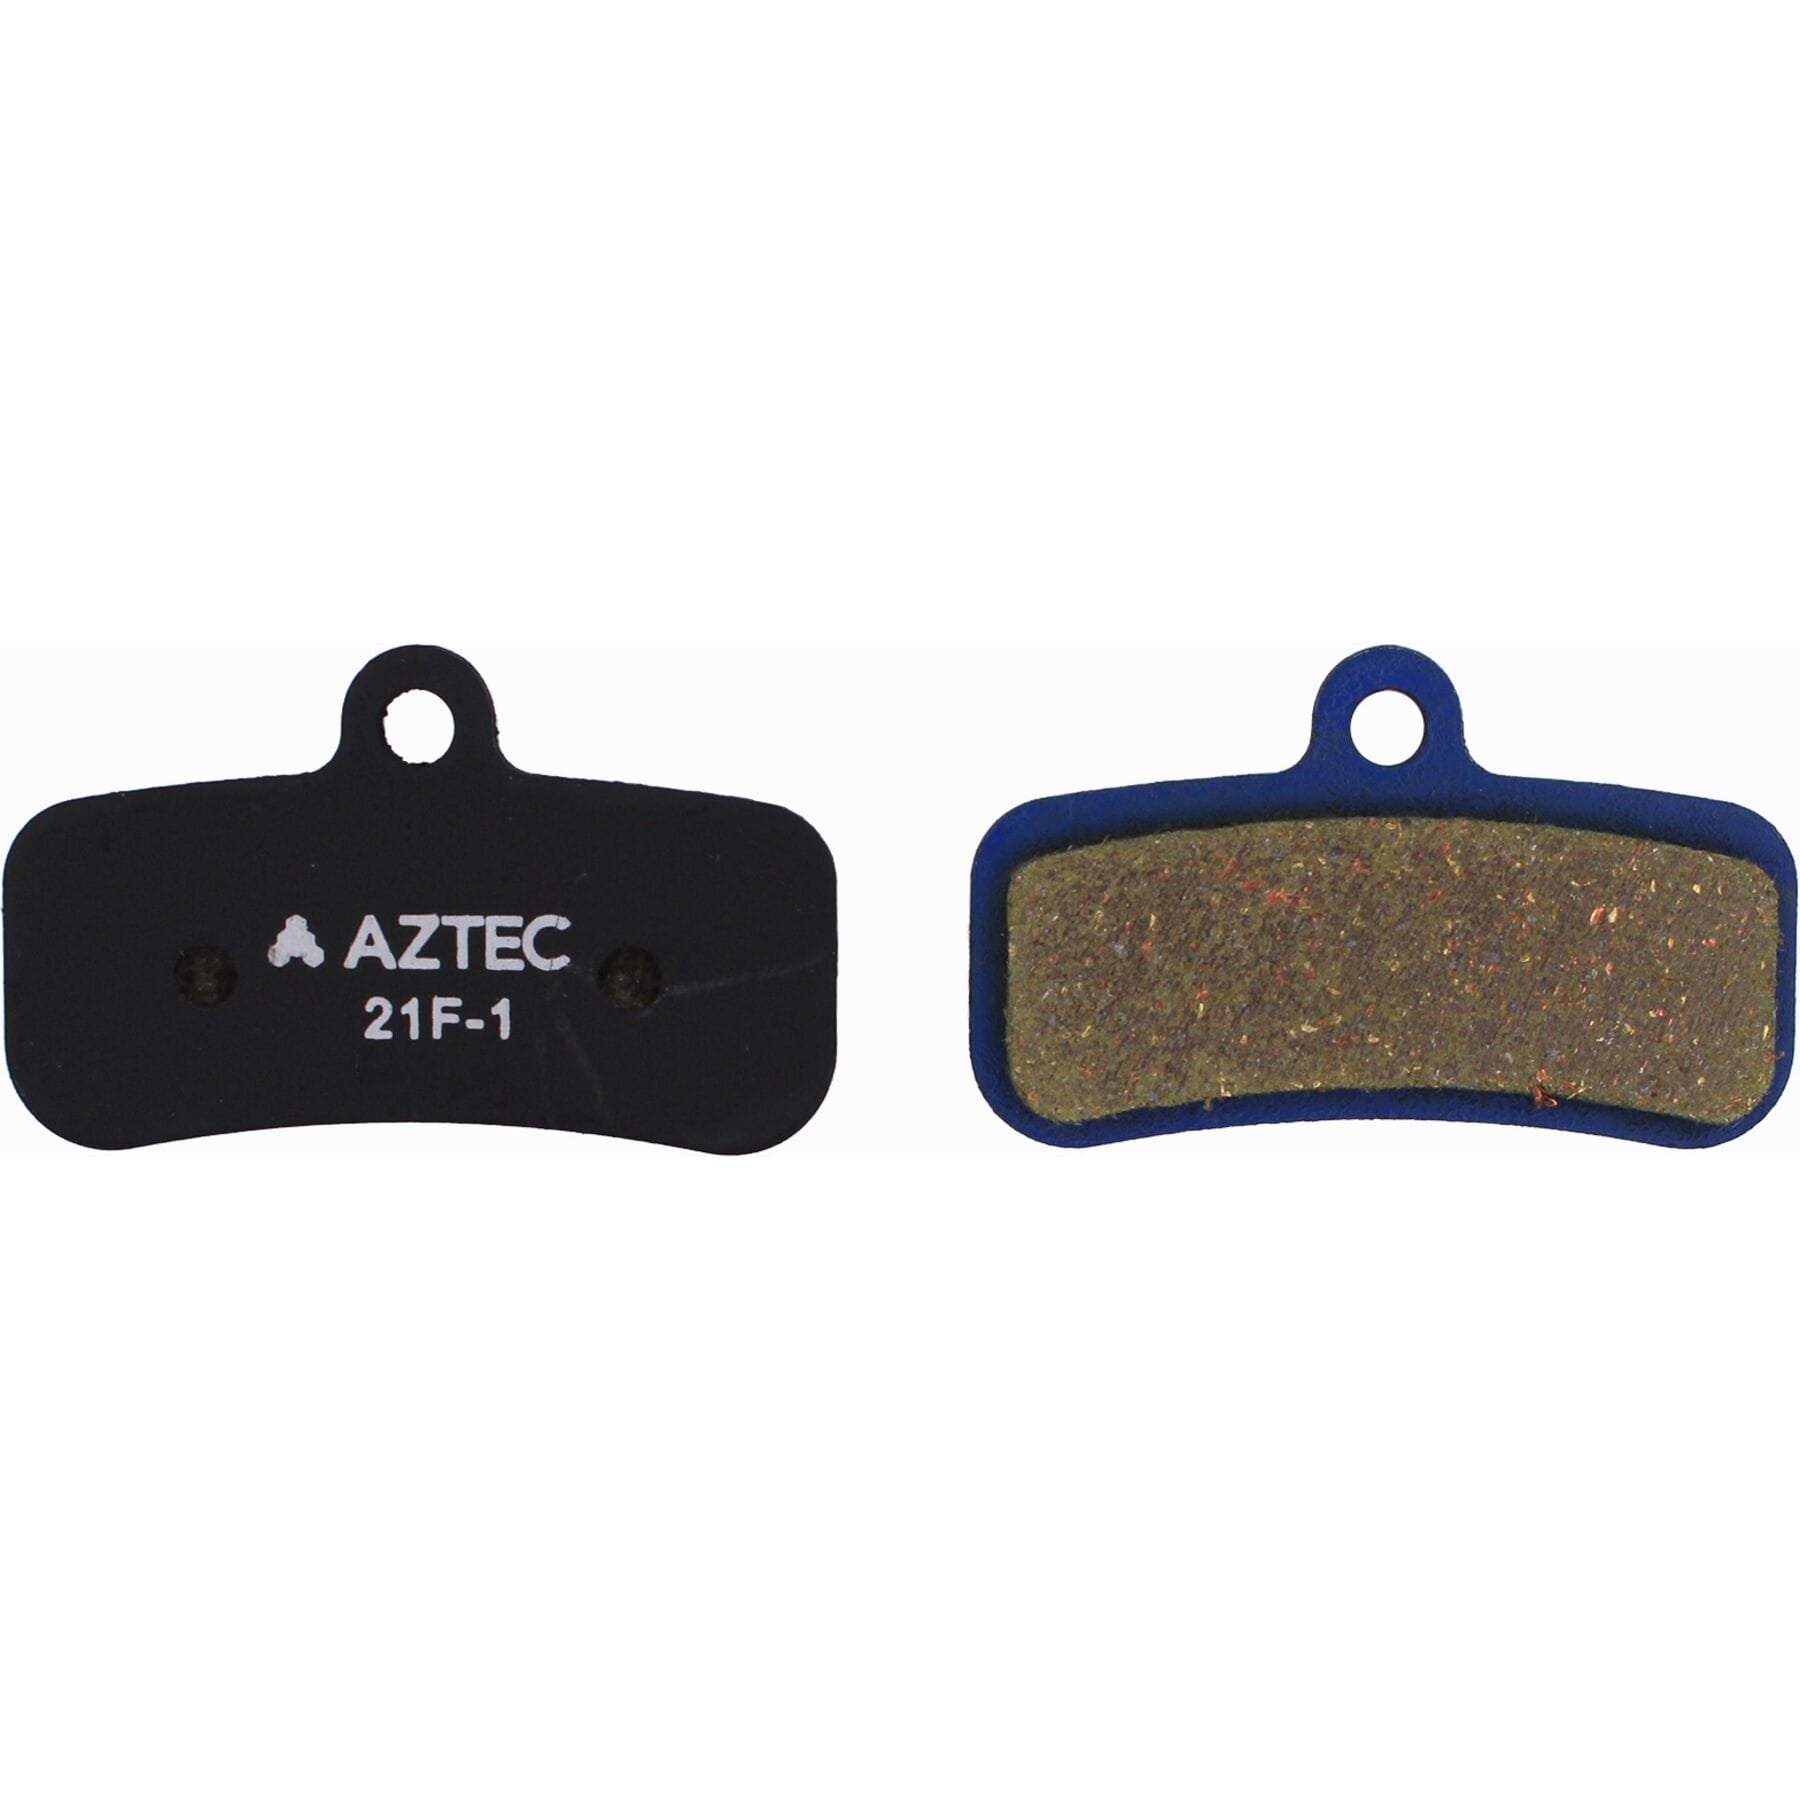 Aztec Shimano Saint/Zee Disc Brake Pads Organic